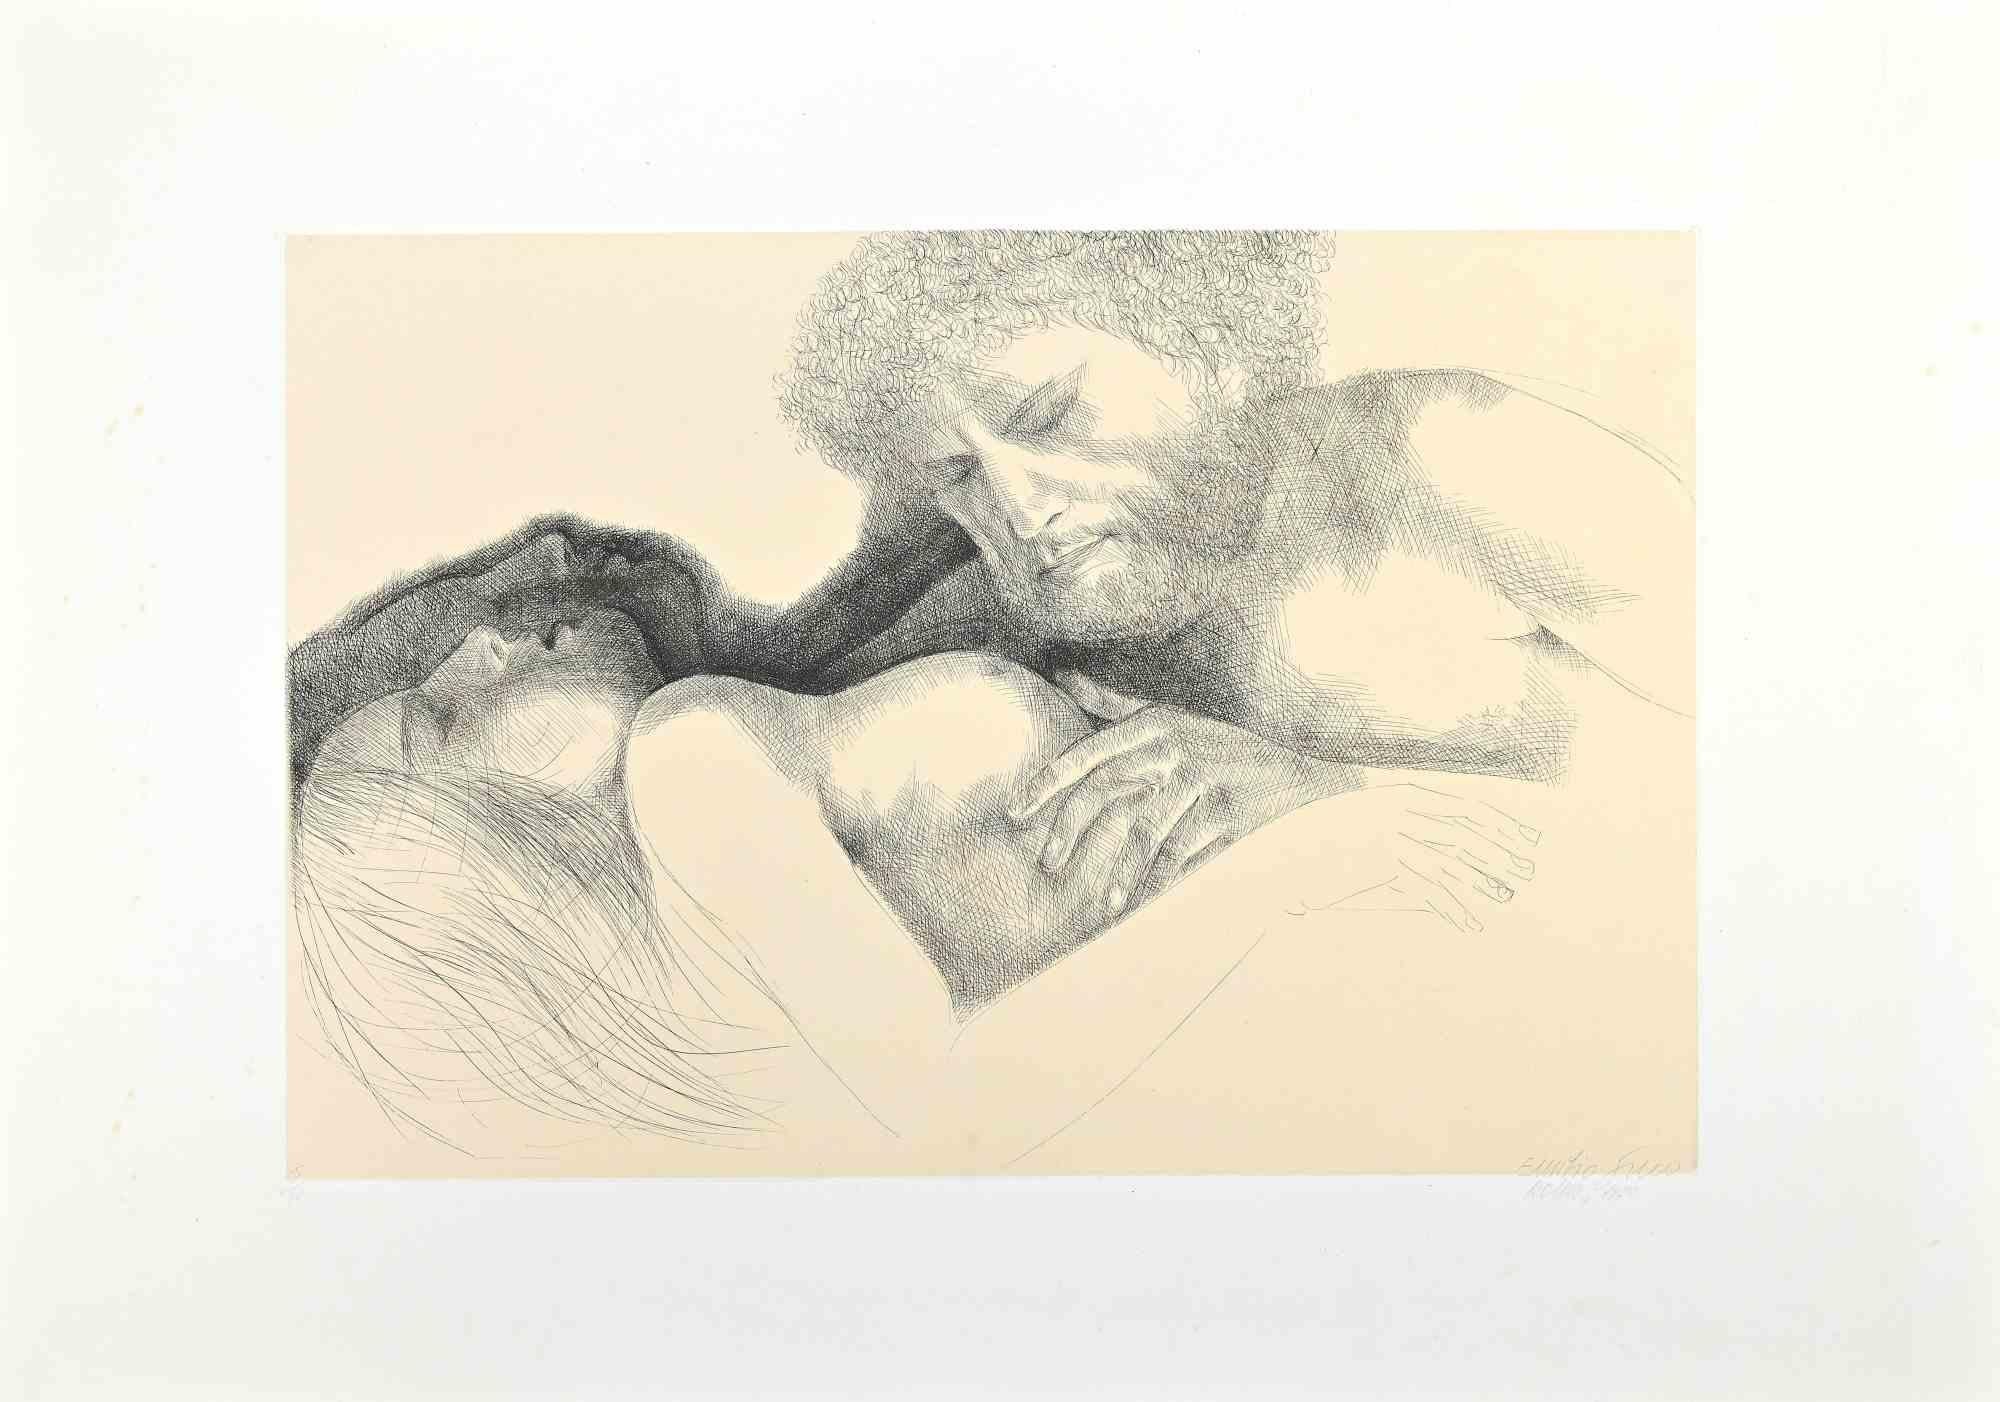 Figurative Print Emilio Greco - Retour d'Ulysses - Gravure par E. Greco - 1970